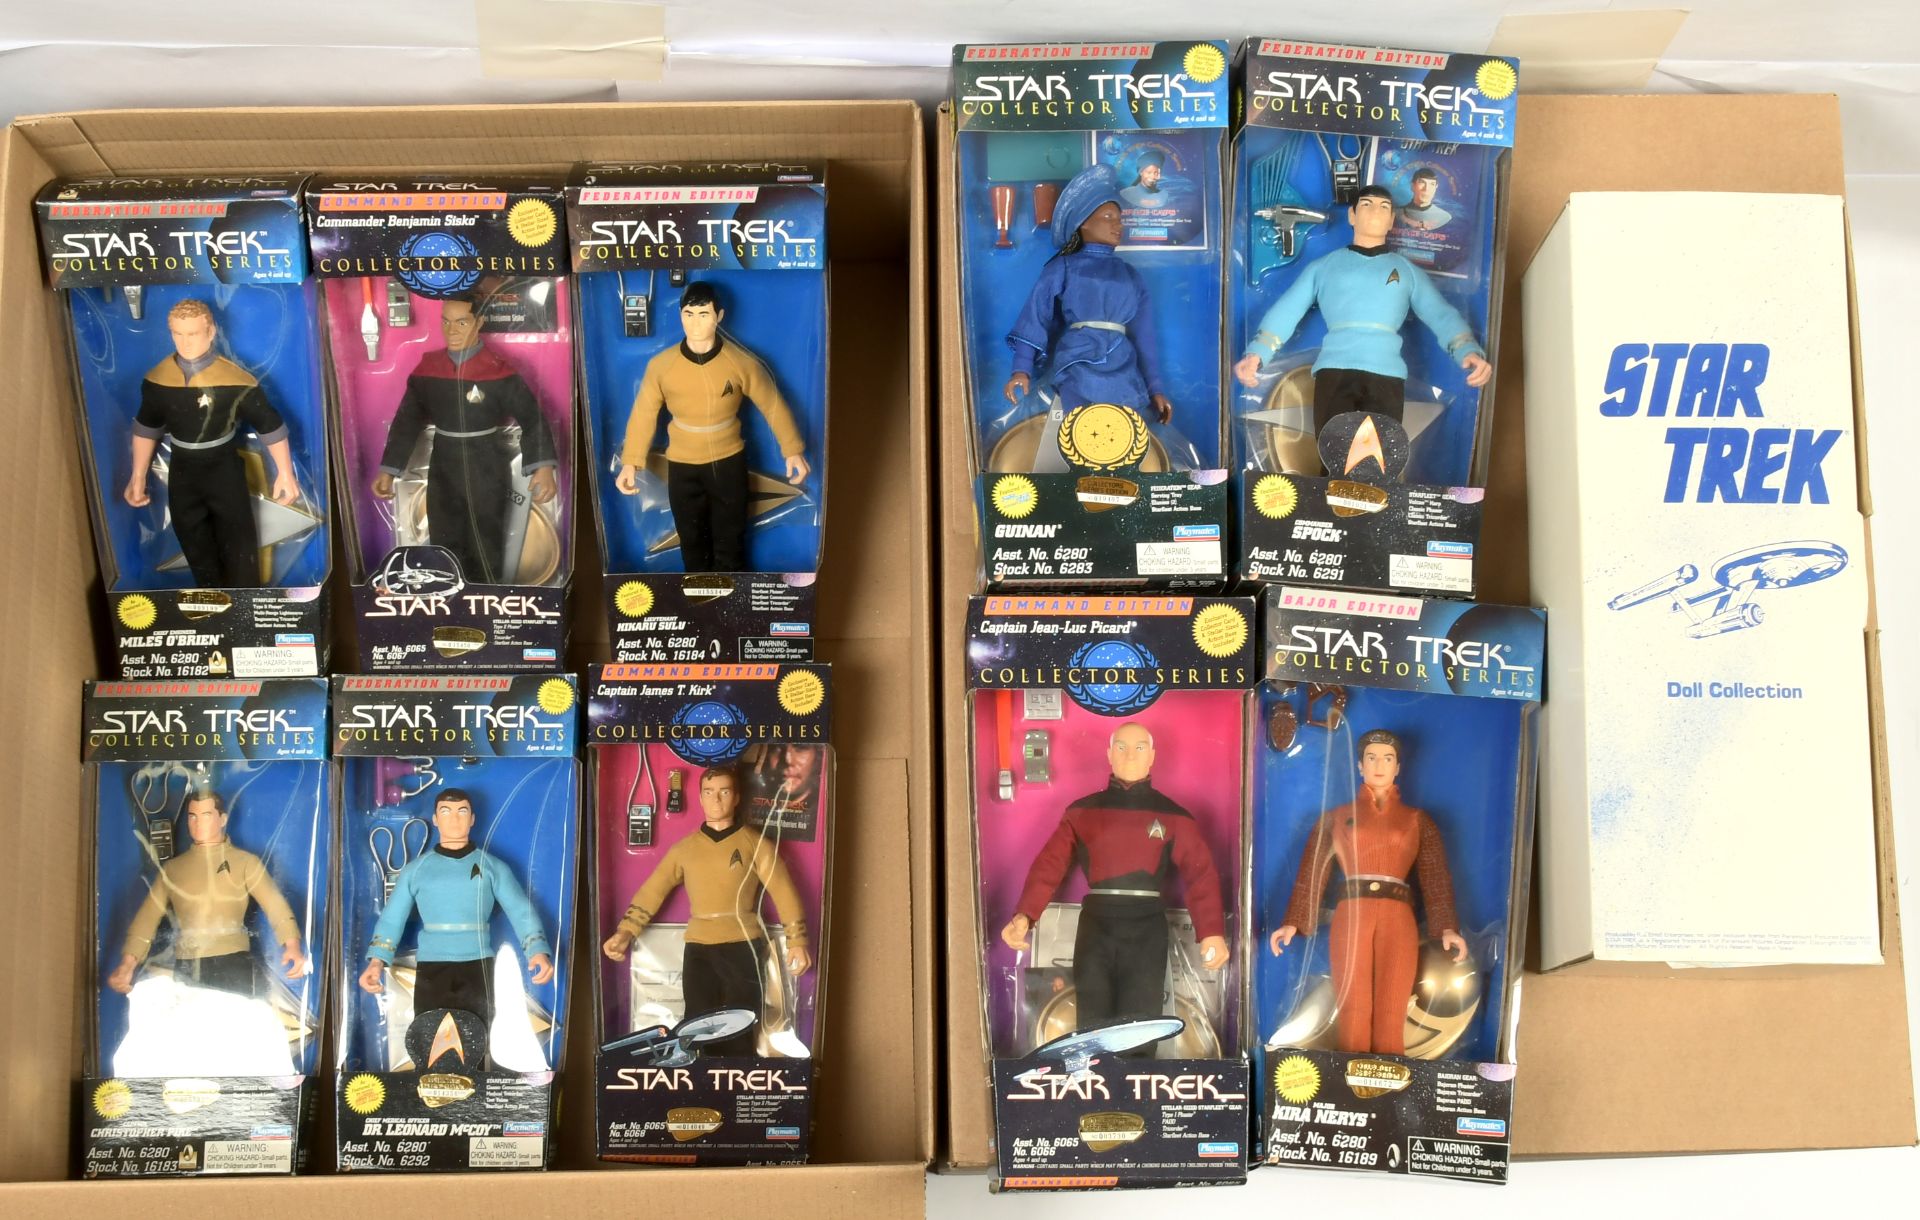 Star Trek quantity of 9" action figures